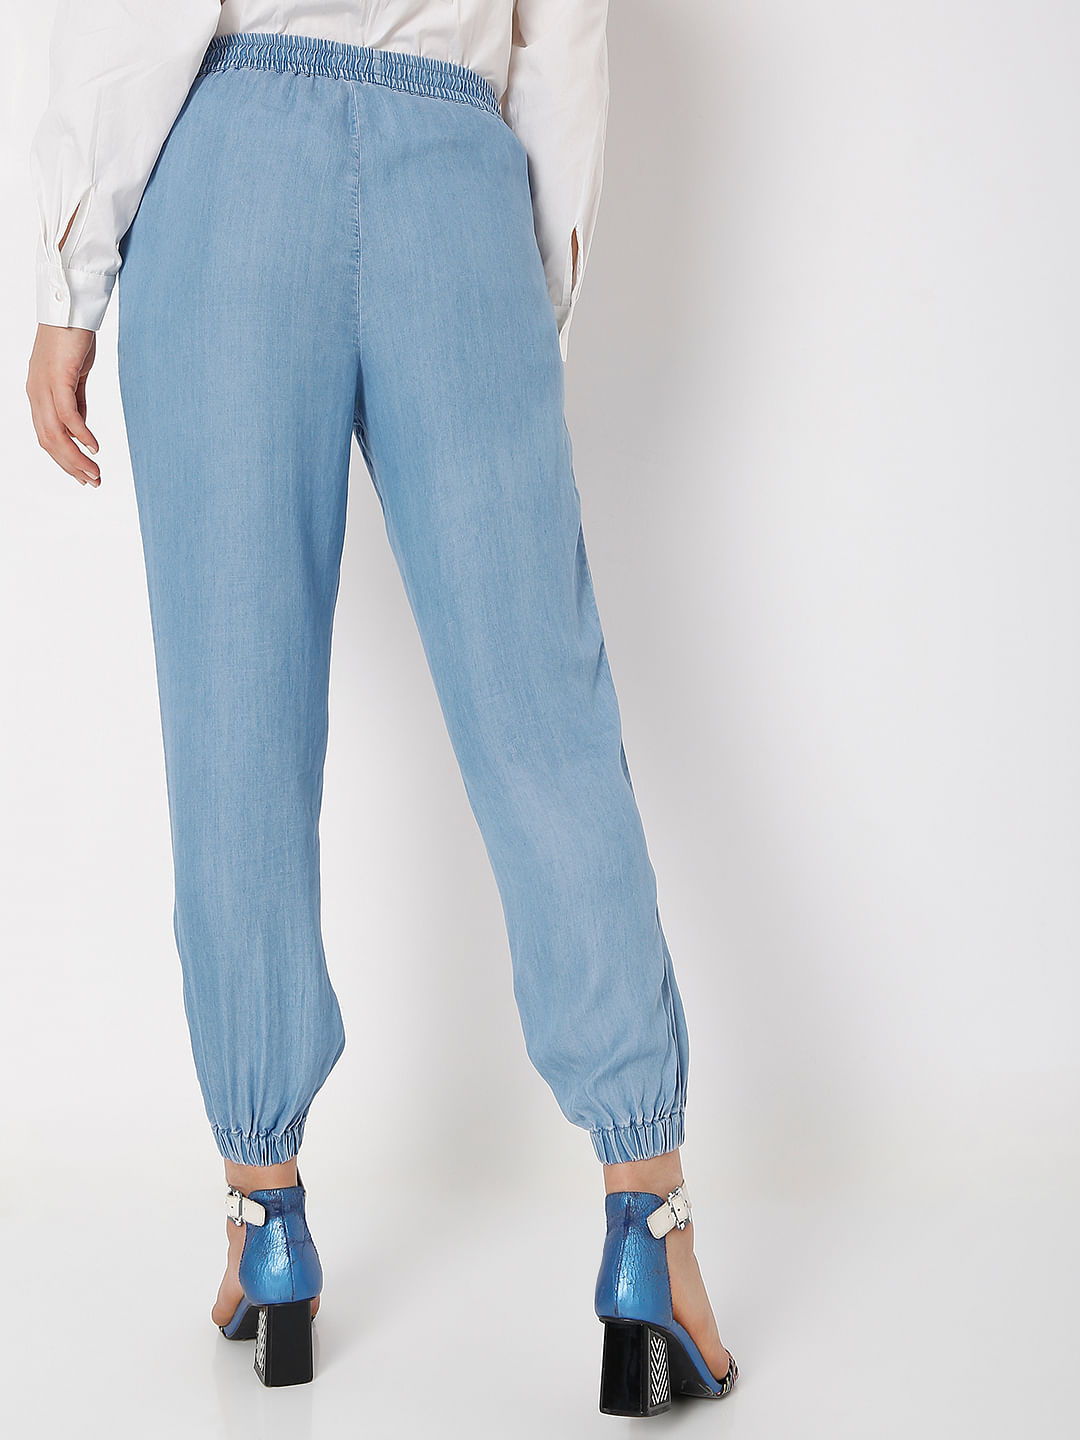 17 Stretch Jeans For Women That Feel Like Leggings - Starting at $16 –  topsfordays